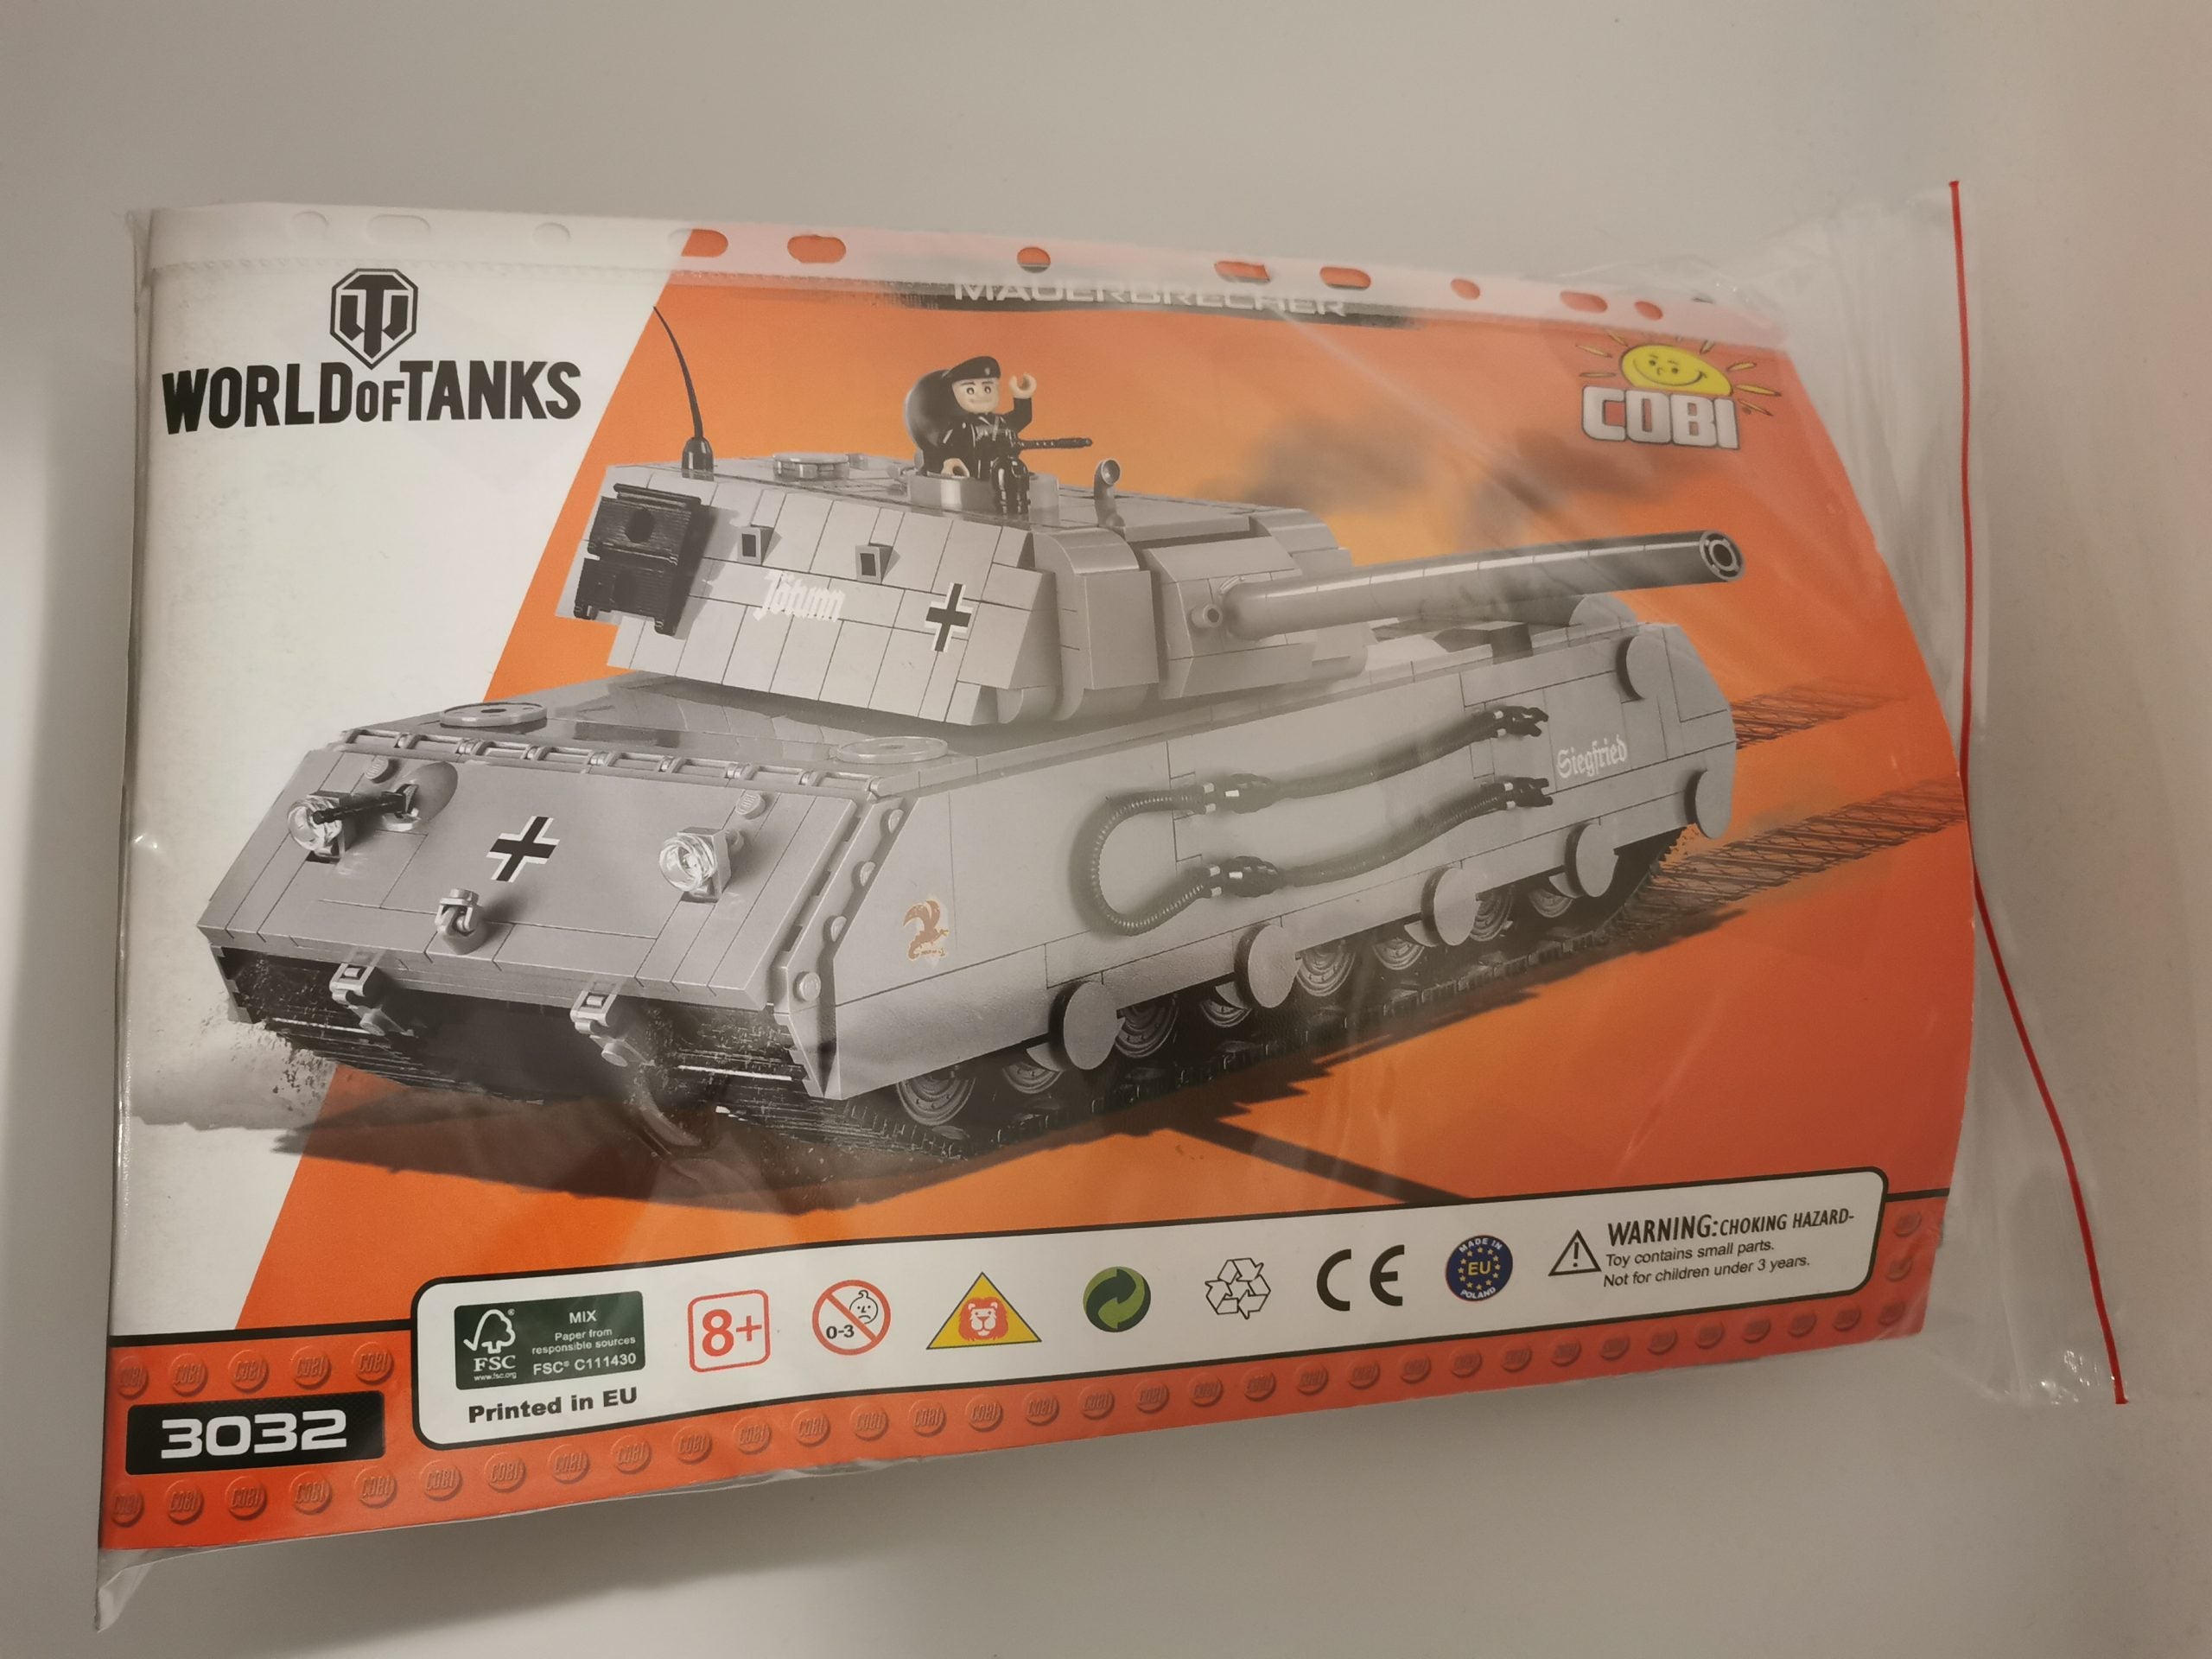 Rompemuros Cobi 3032 (World of Tanks) usado